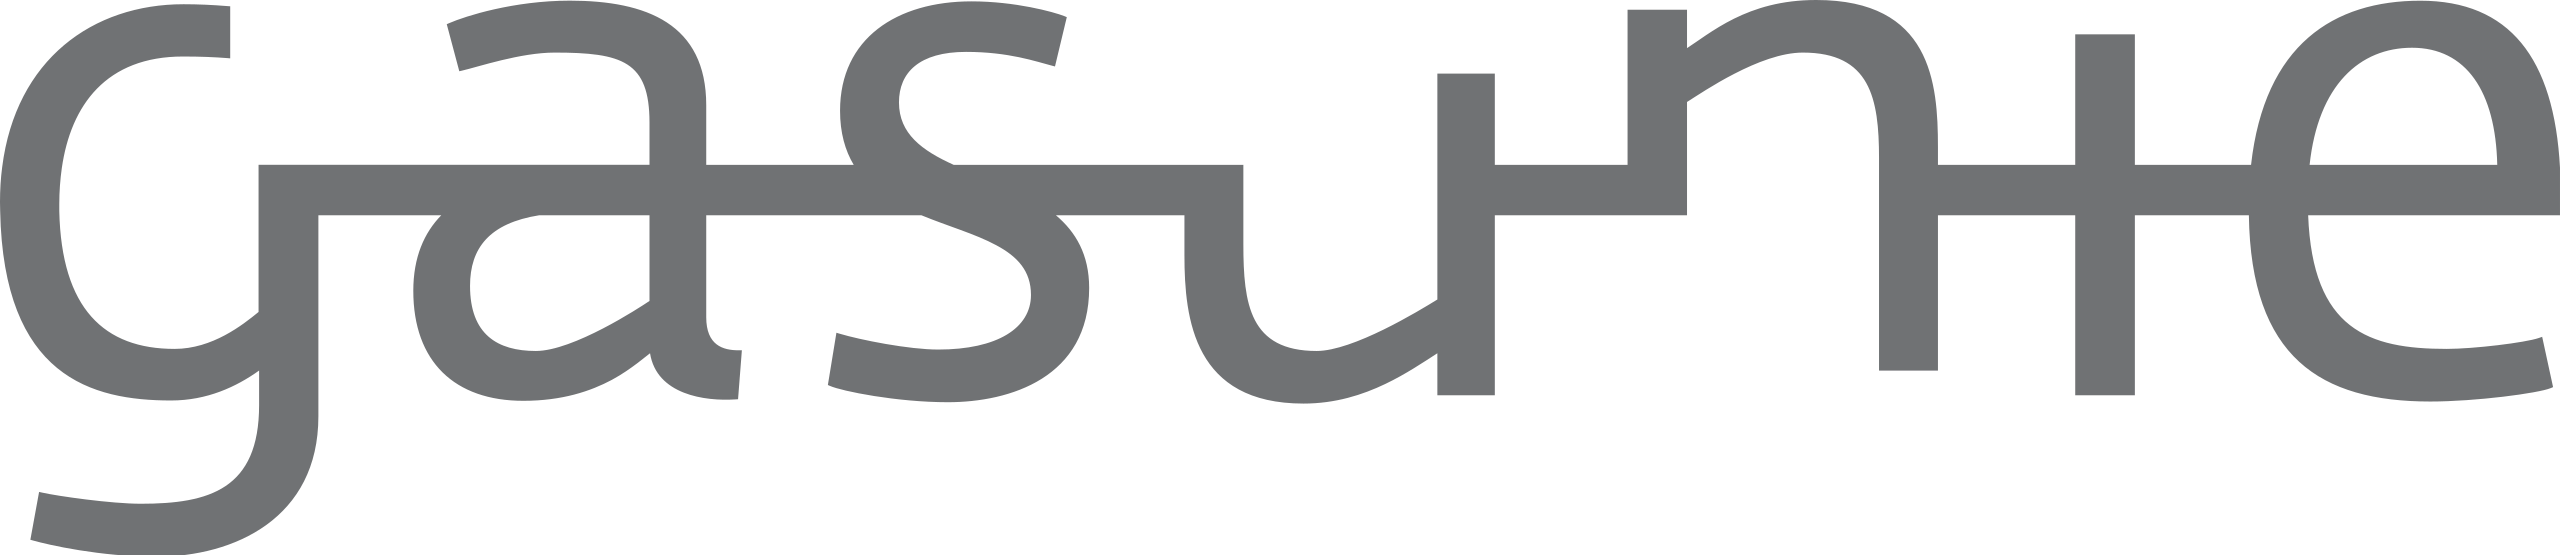 2560px-Gasunie-logo.svg.png